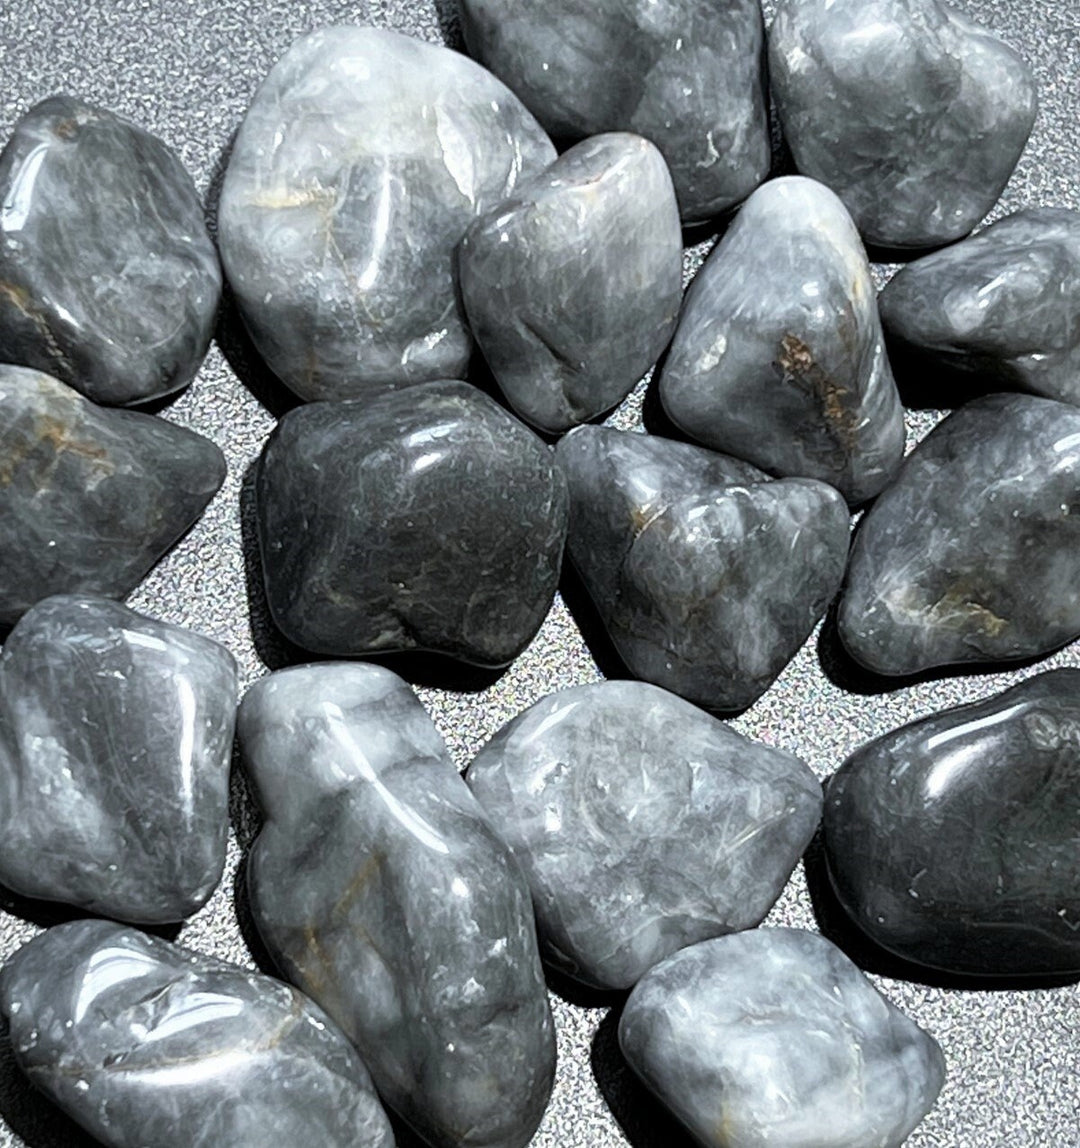 Bulk Wholesale Lot 1 LB Gray Quartz One Pound Tumbled Polished Stones Natural Gemstones Crystals